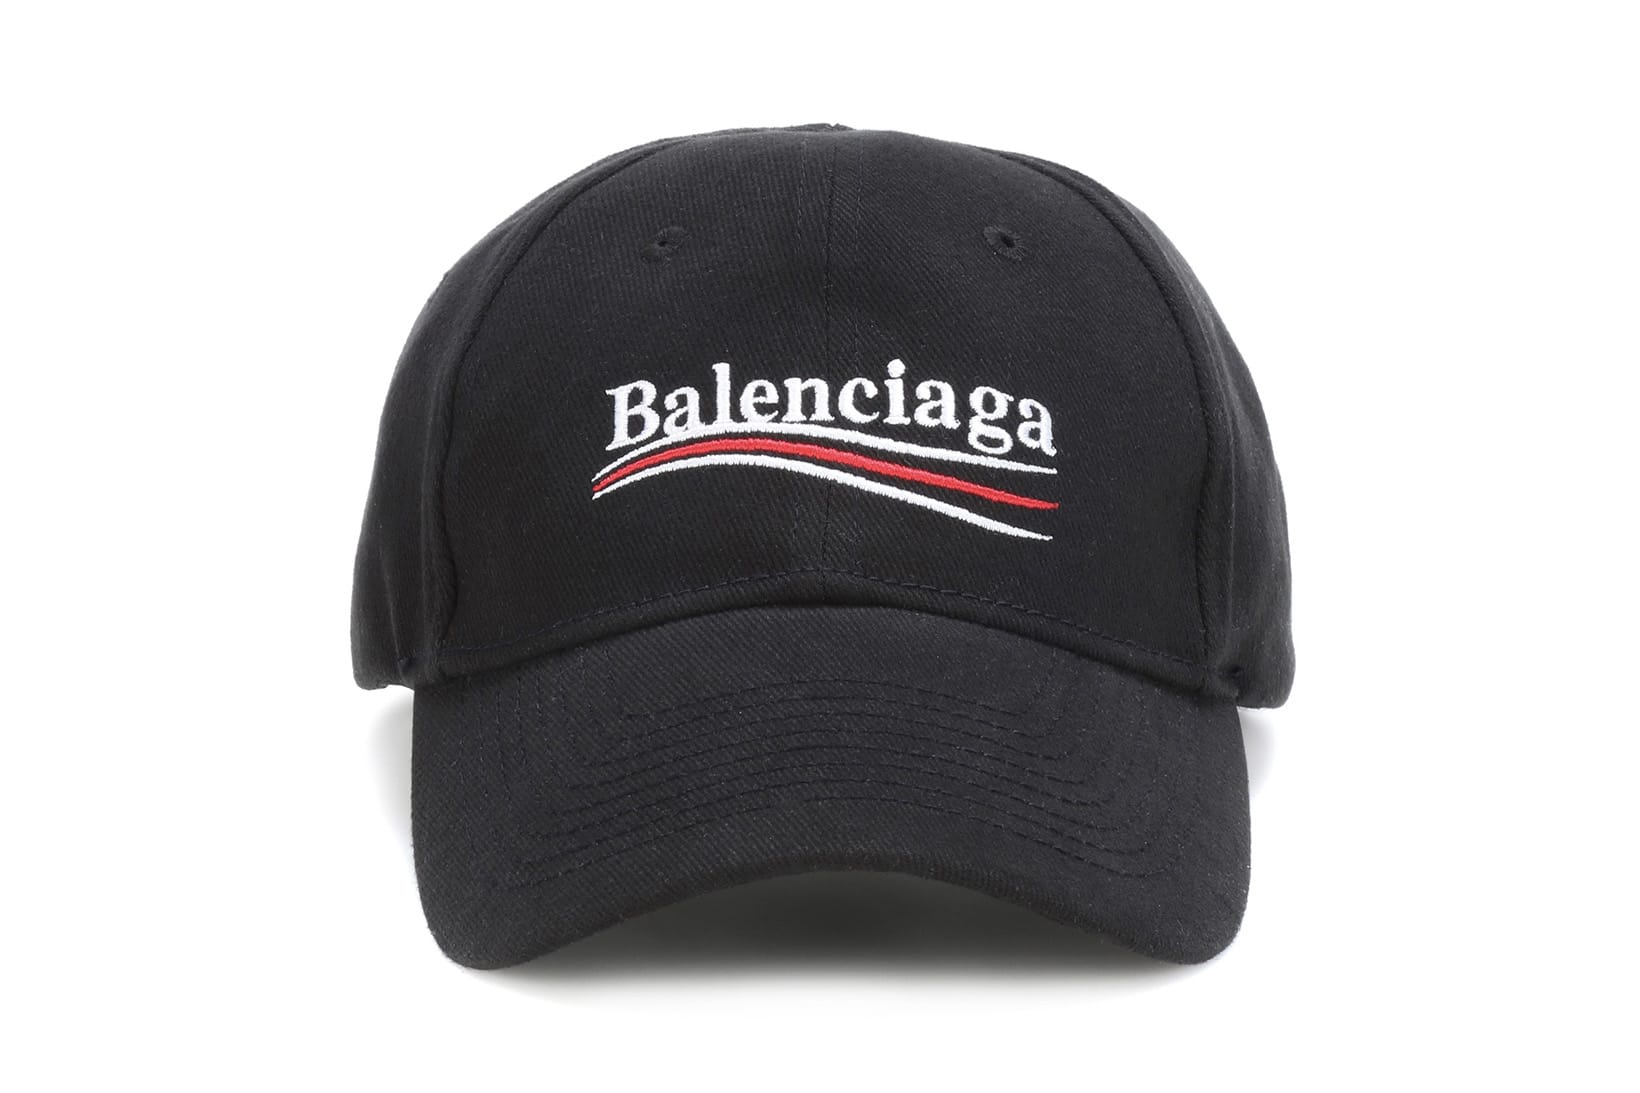 it's not balenciaga cap